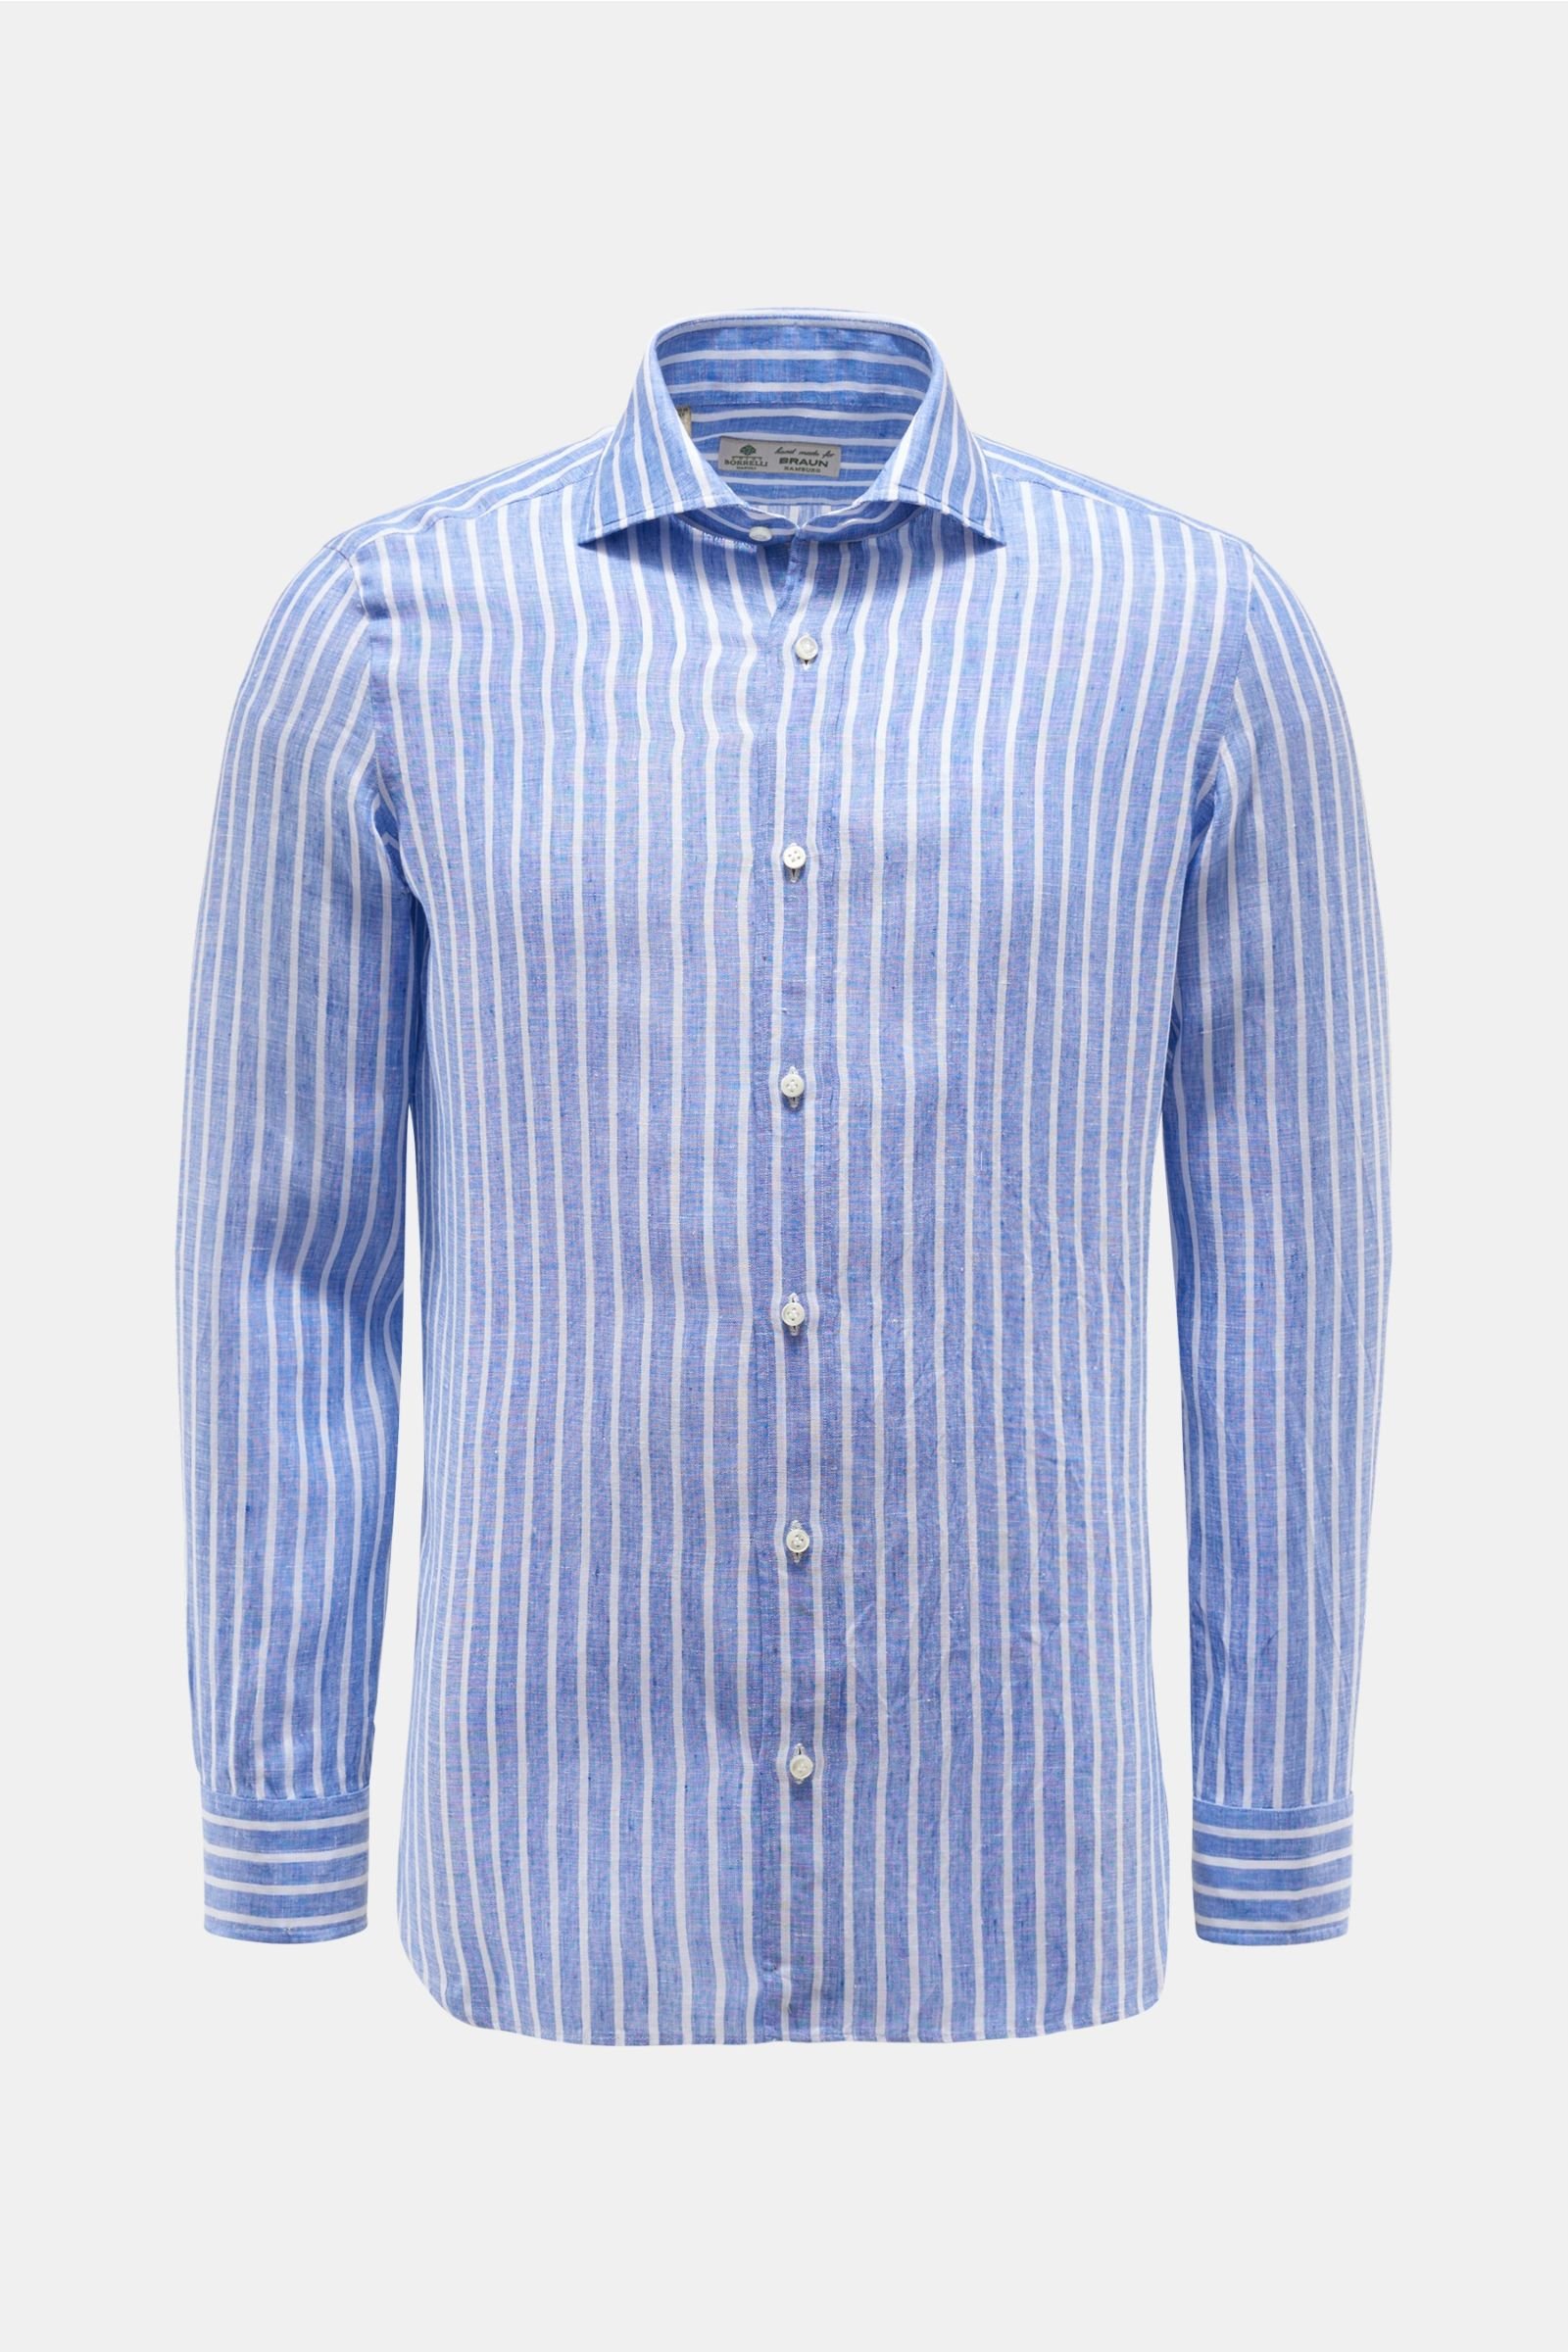 Linen shirt 'Ettore' shark collar dark blue/white striped